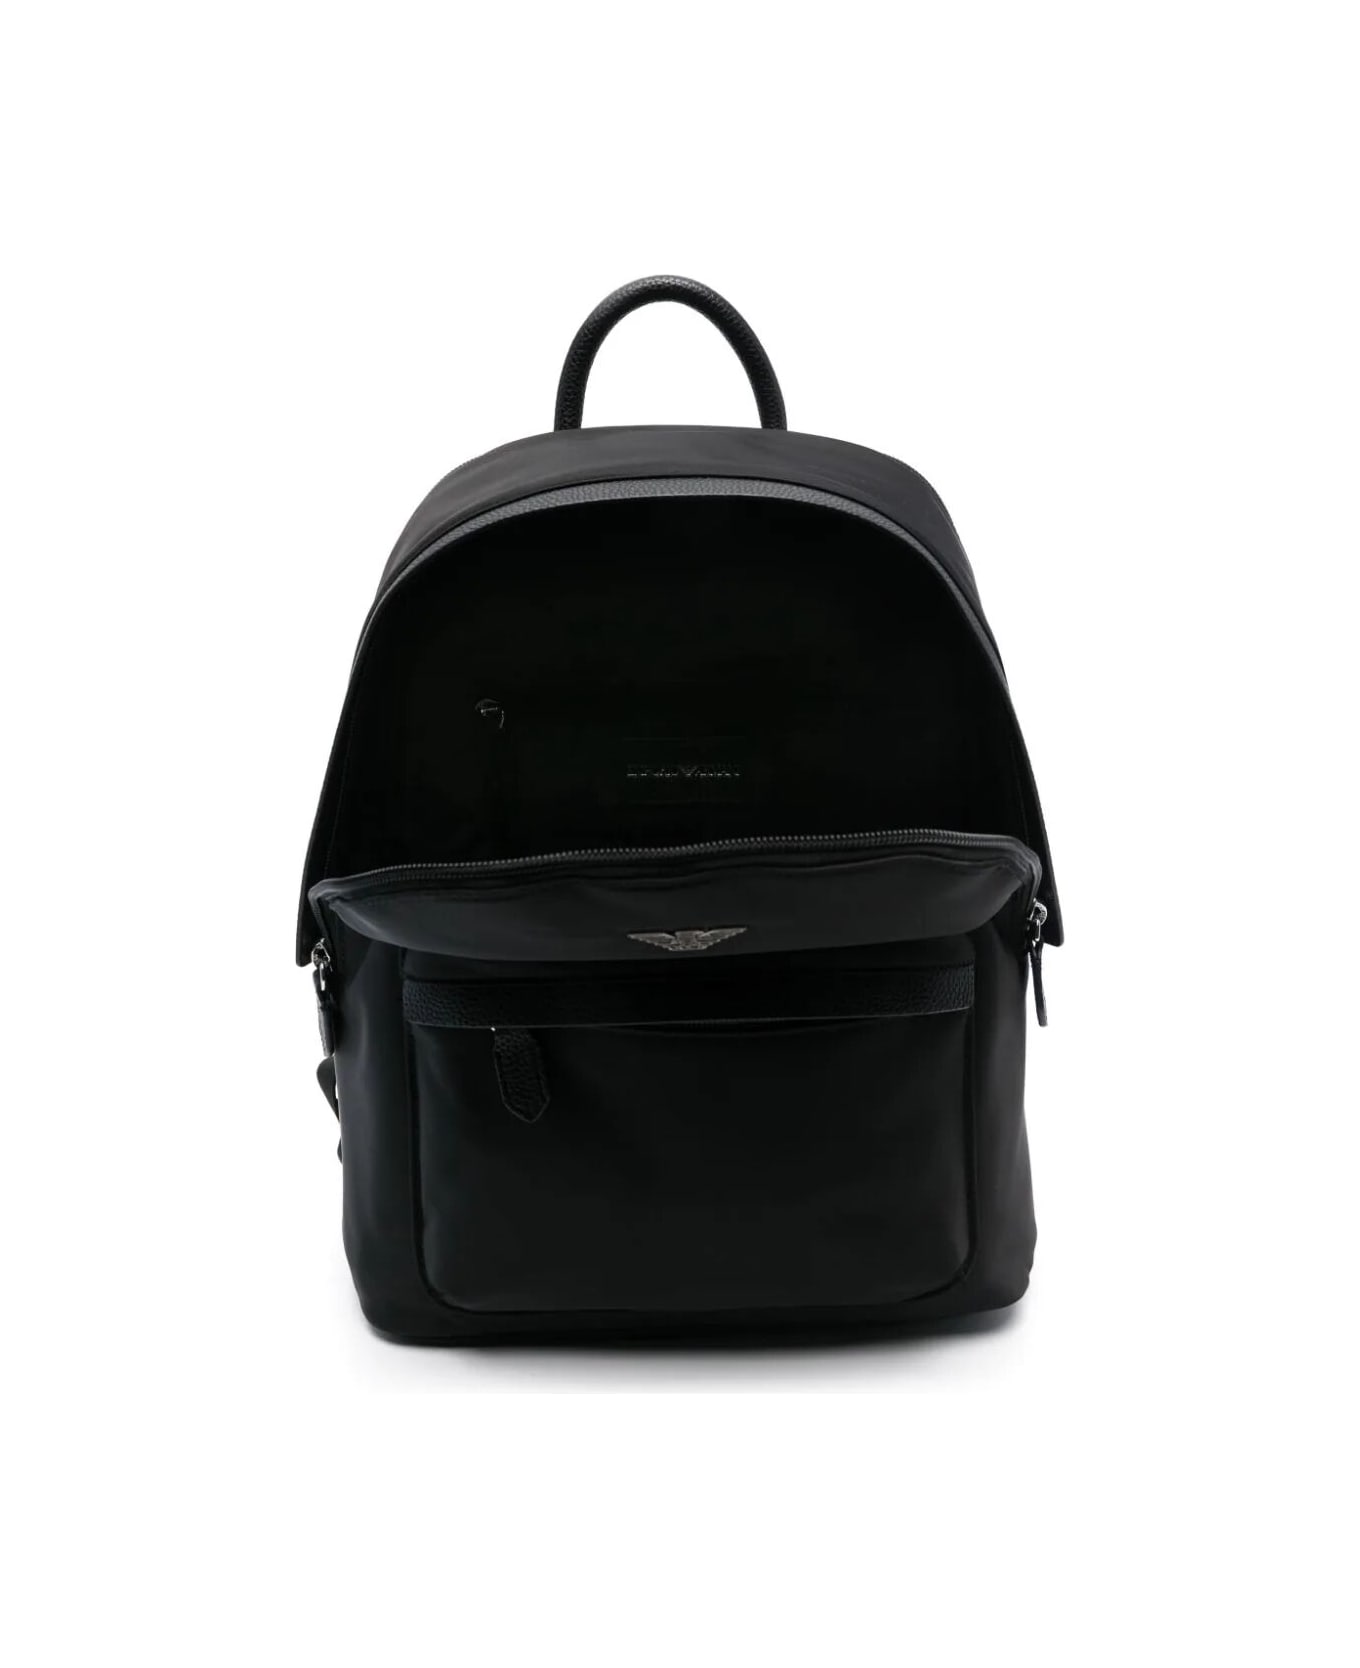 Emporio Armani Backpack - Black